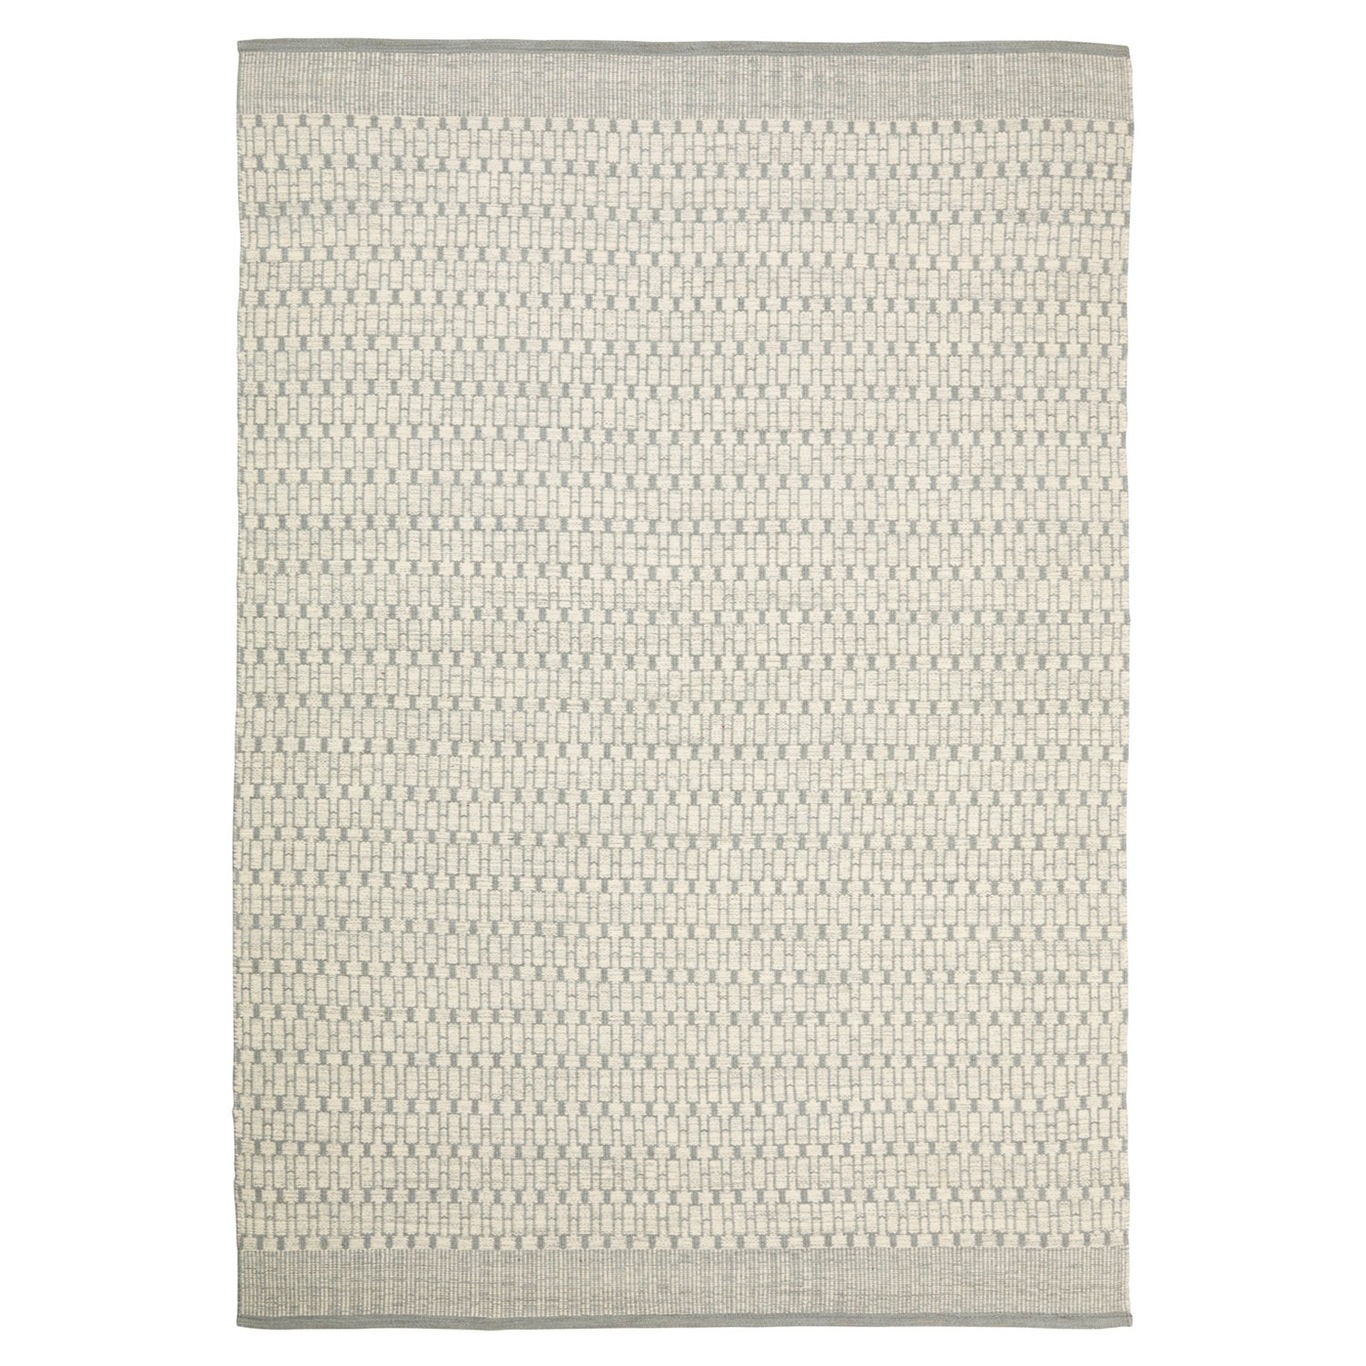 Dhurry Wool Mahi Rug 200x300 cm, Off White/Light Grey